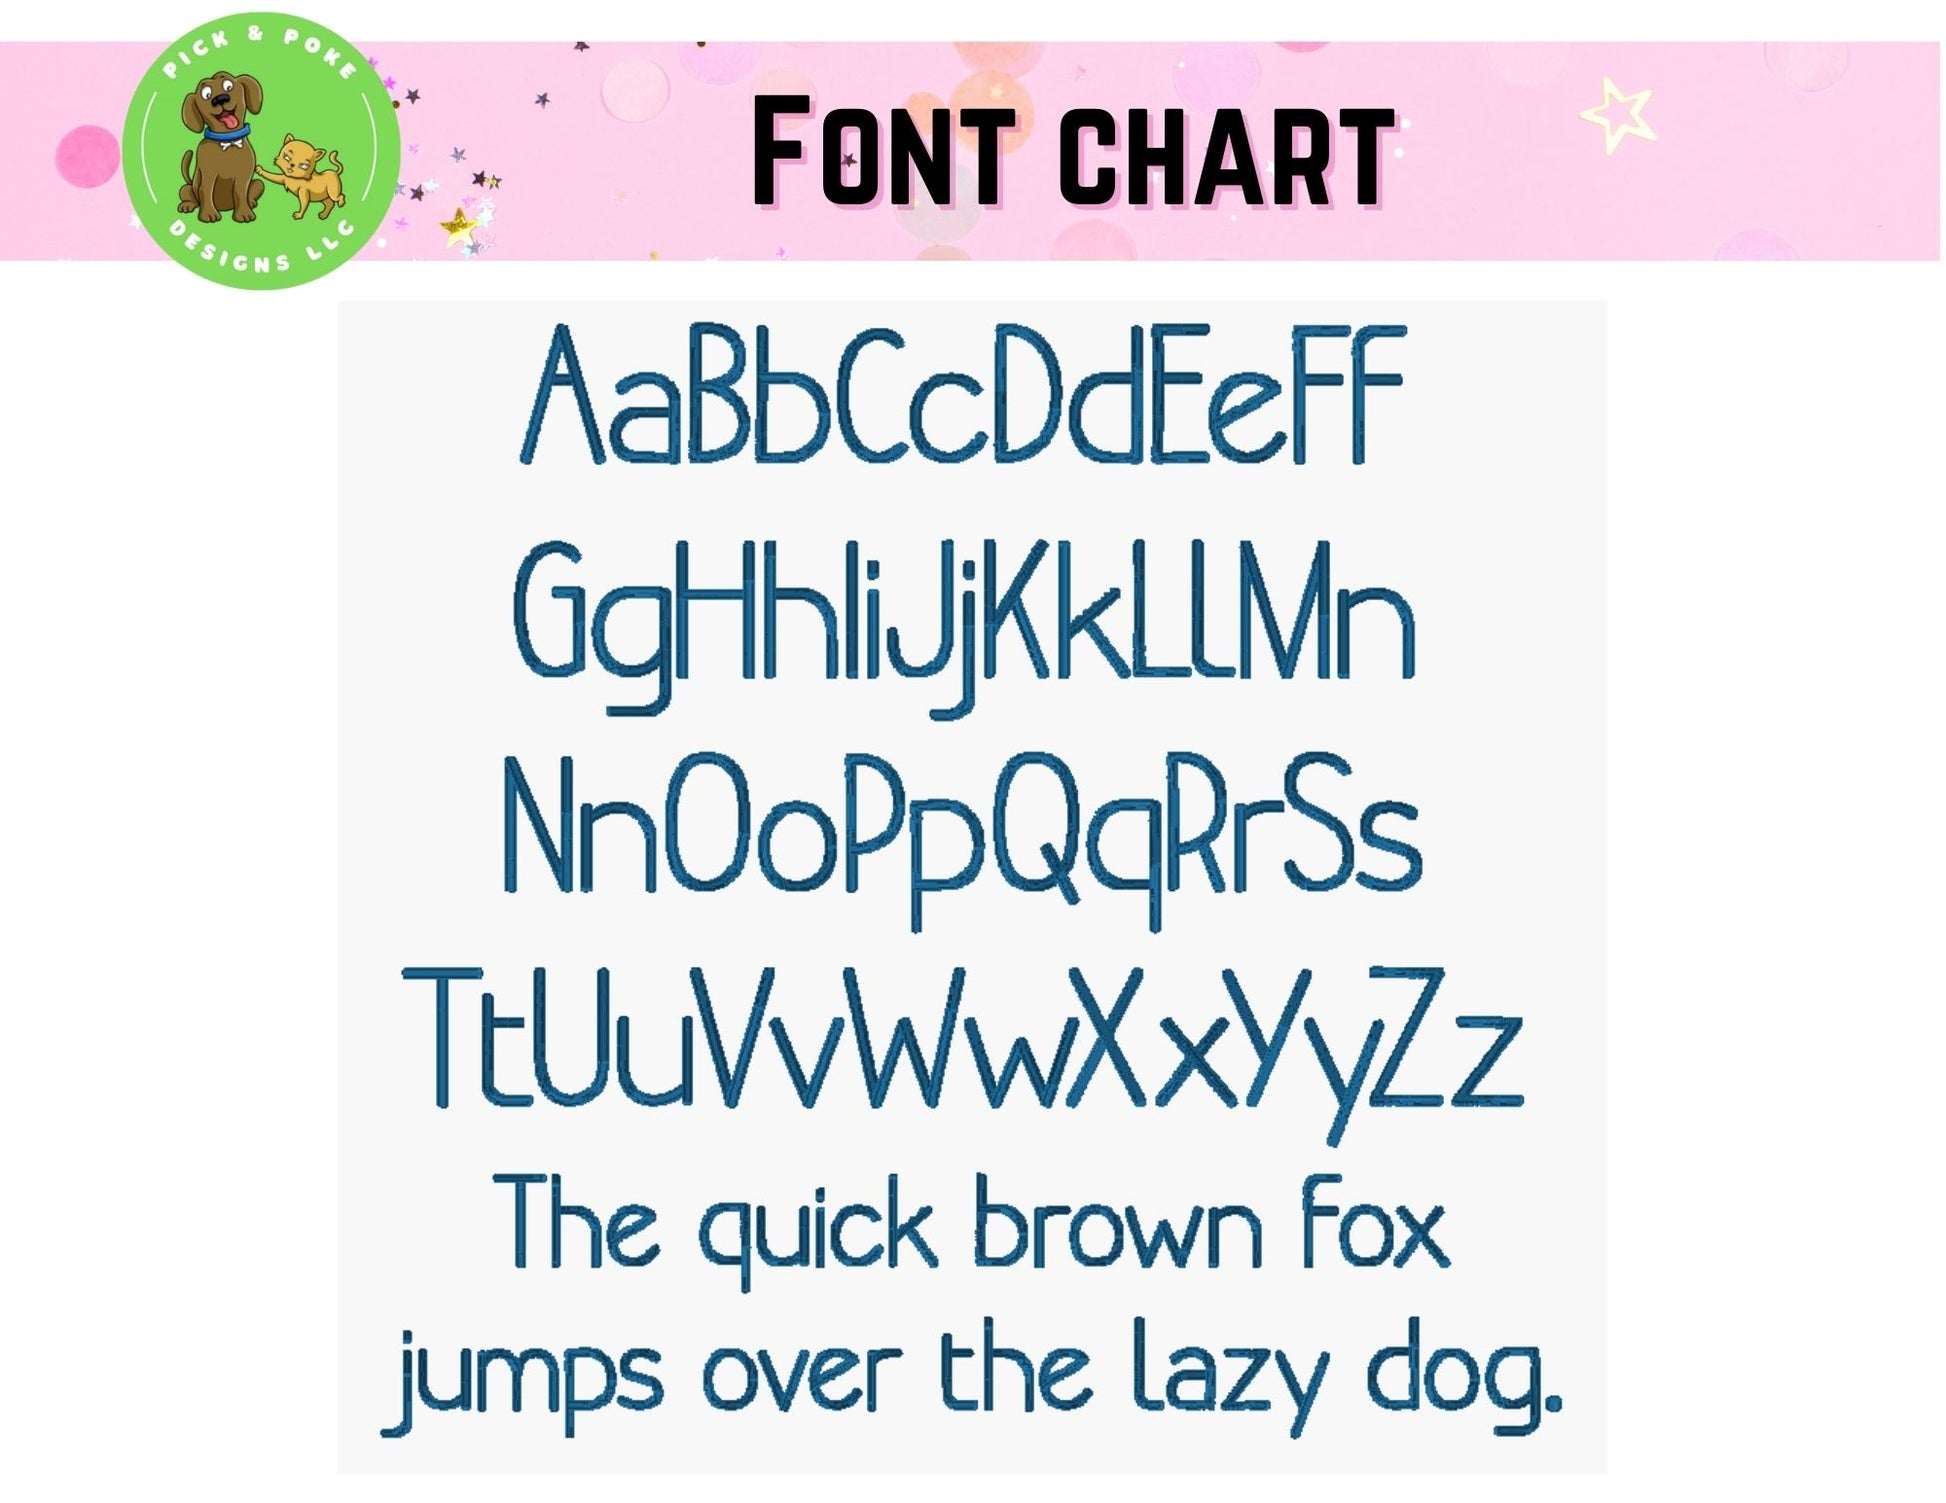 Font chart for crewnecks using a sans serif font